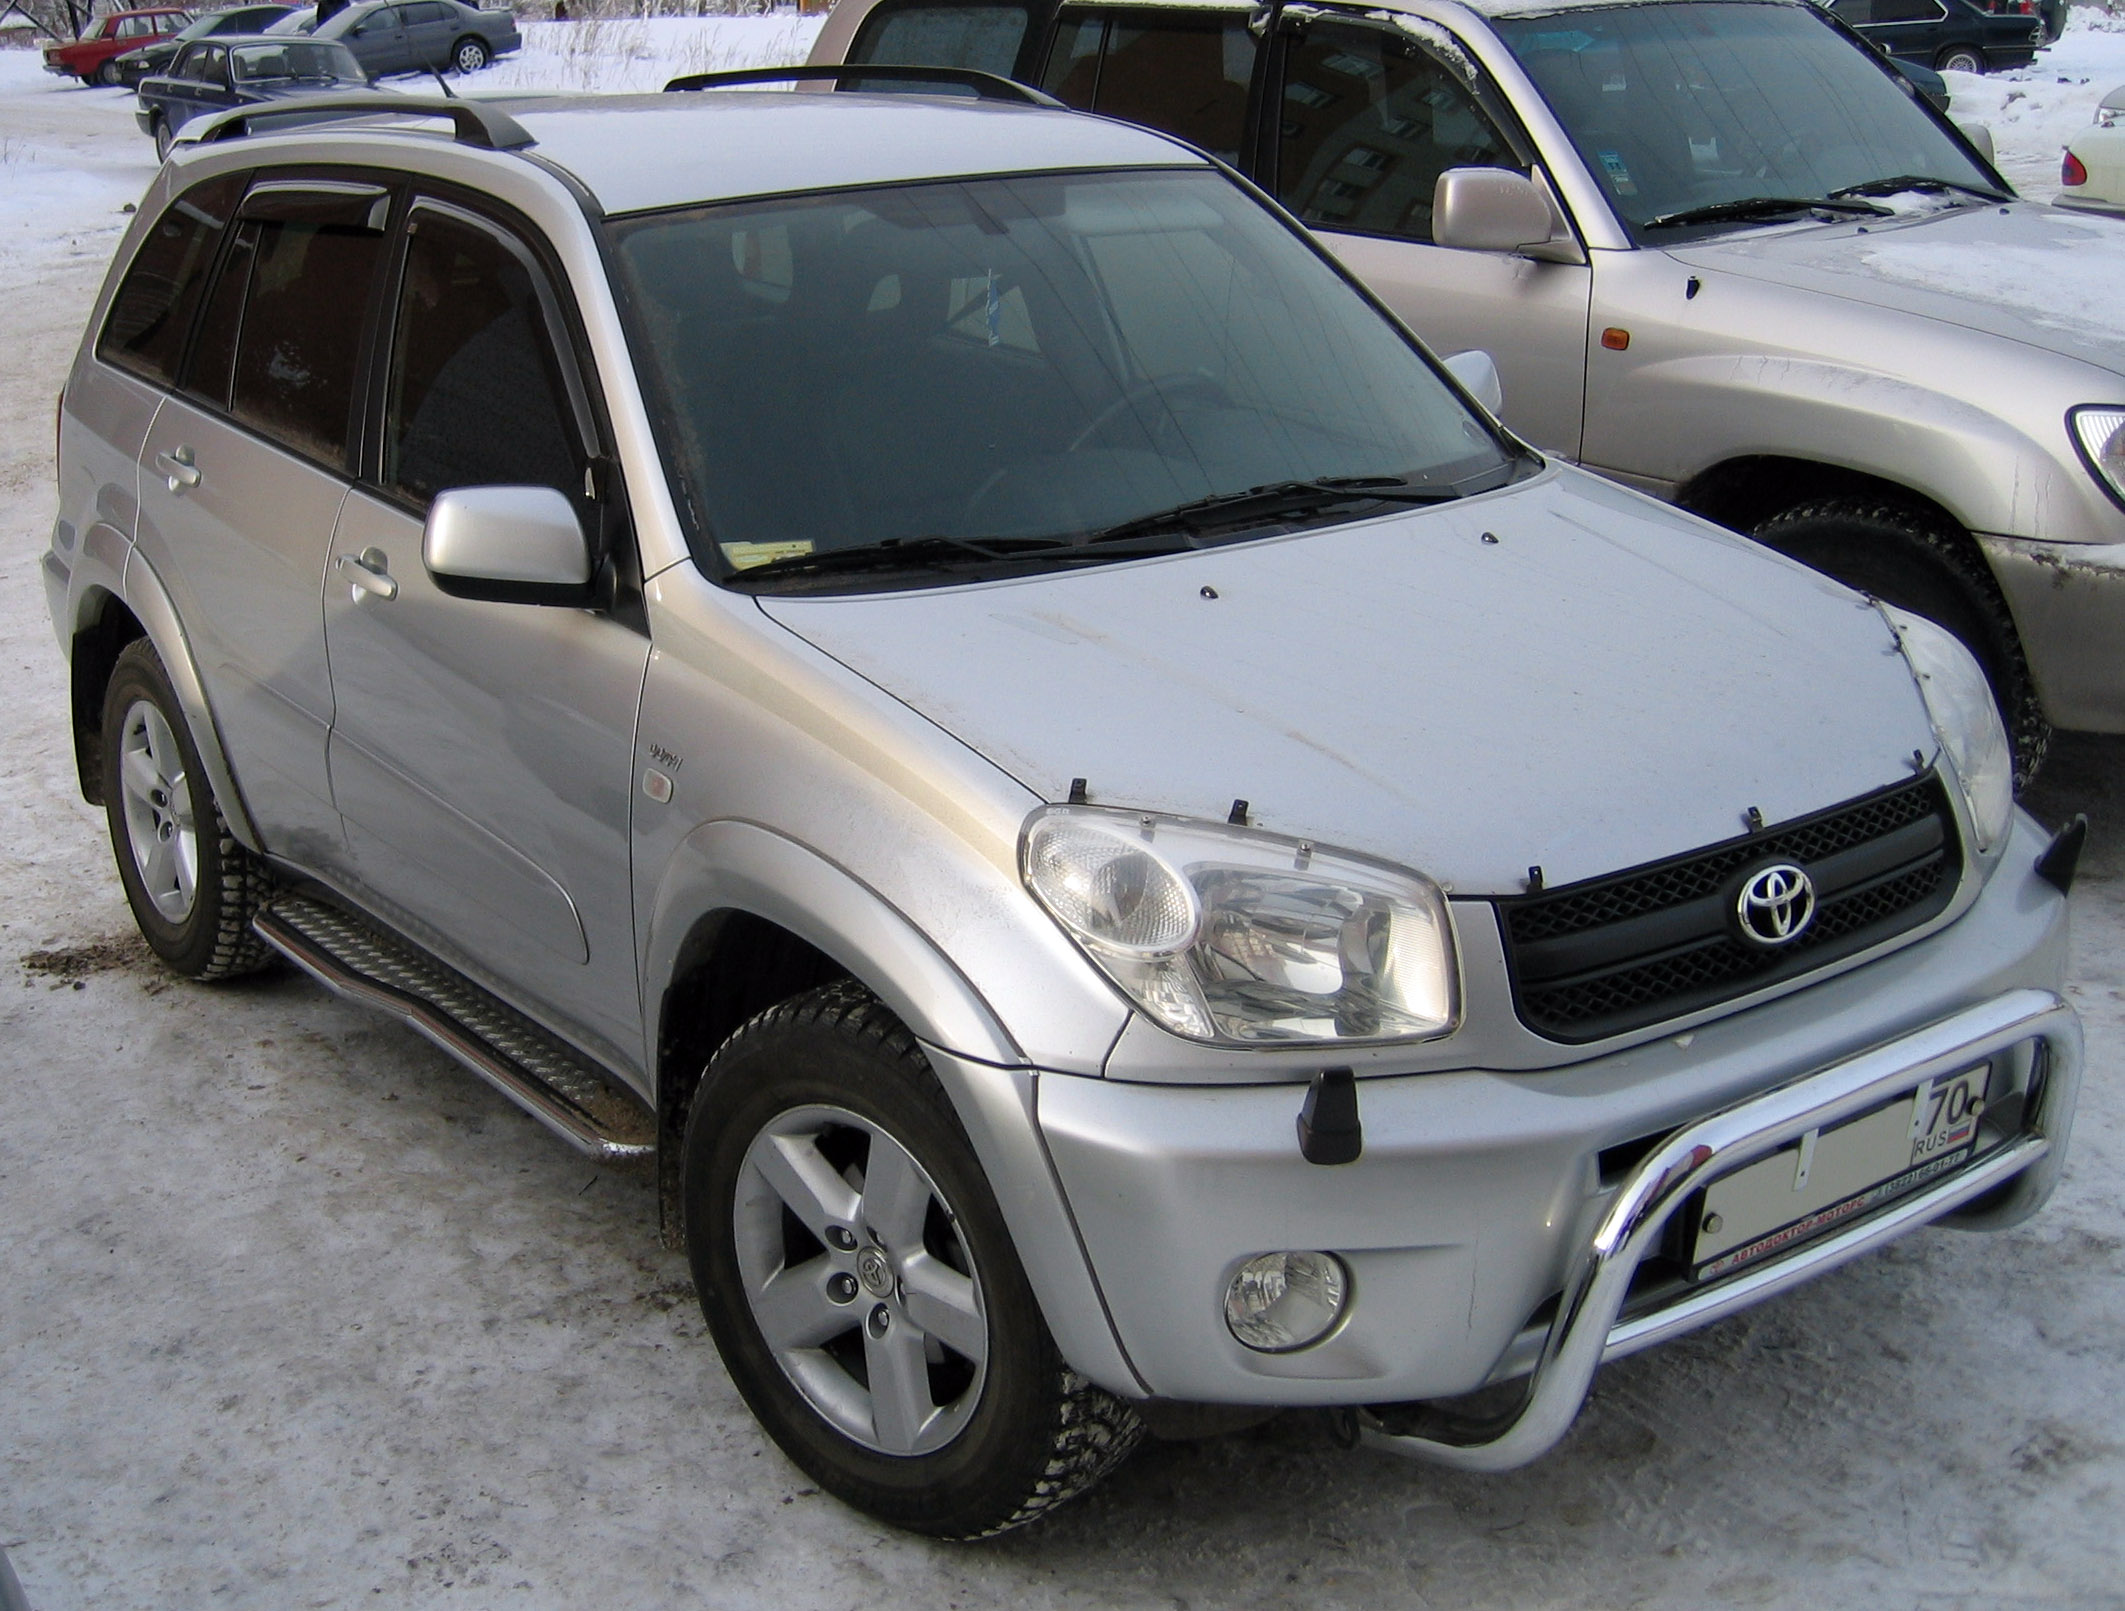 2004 Toyota RAV4 specs: mpg, towing capacity, size, photos